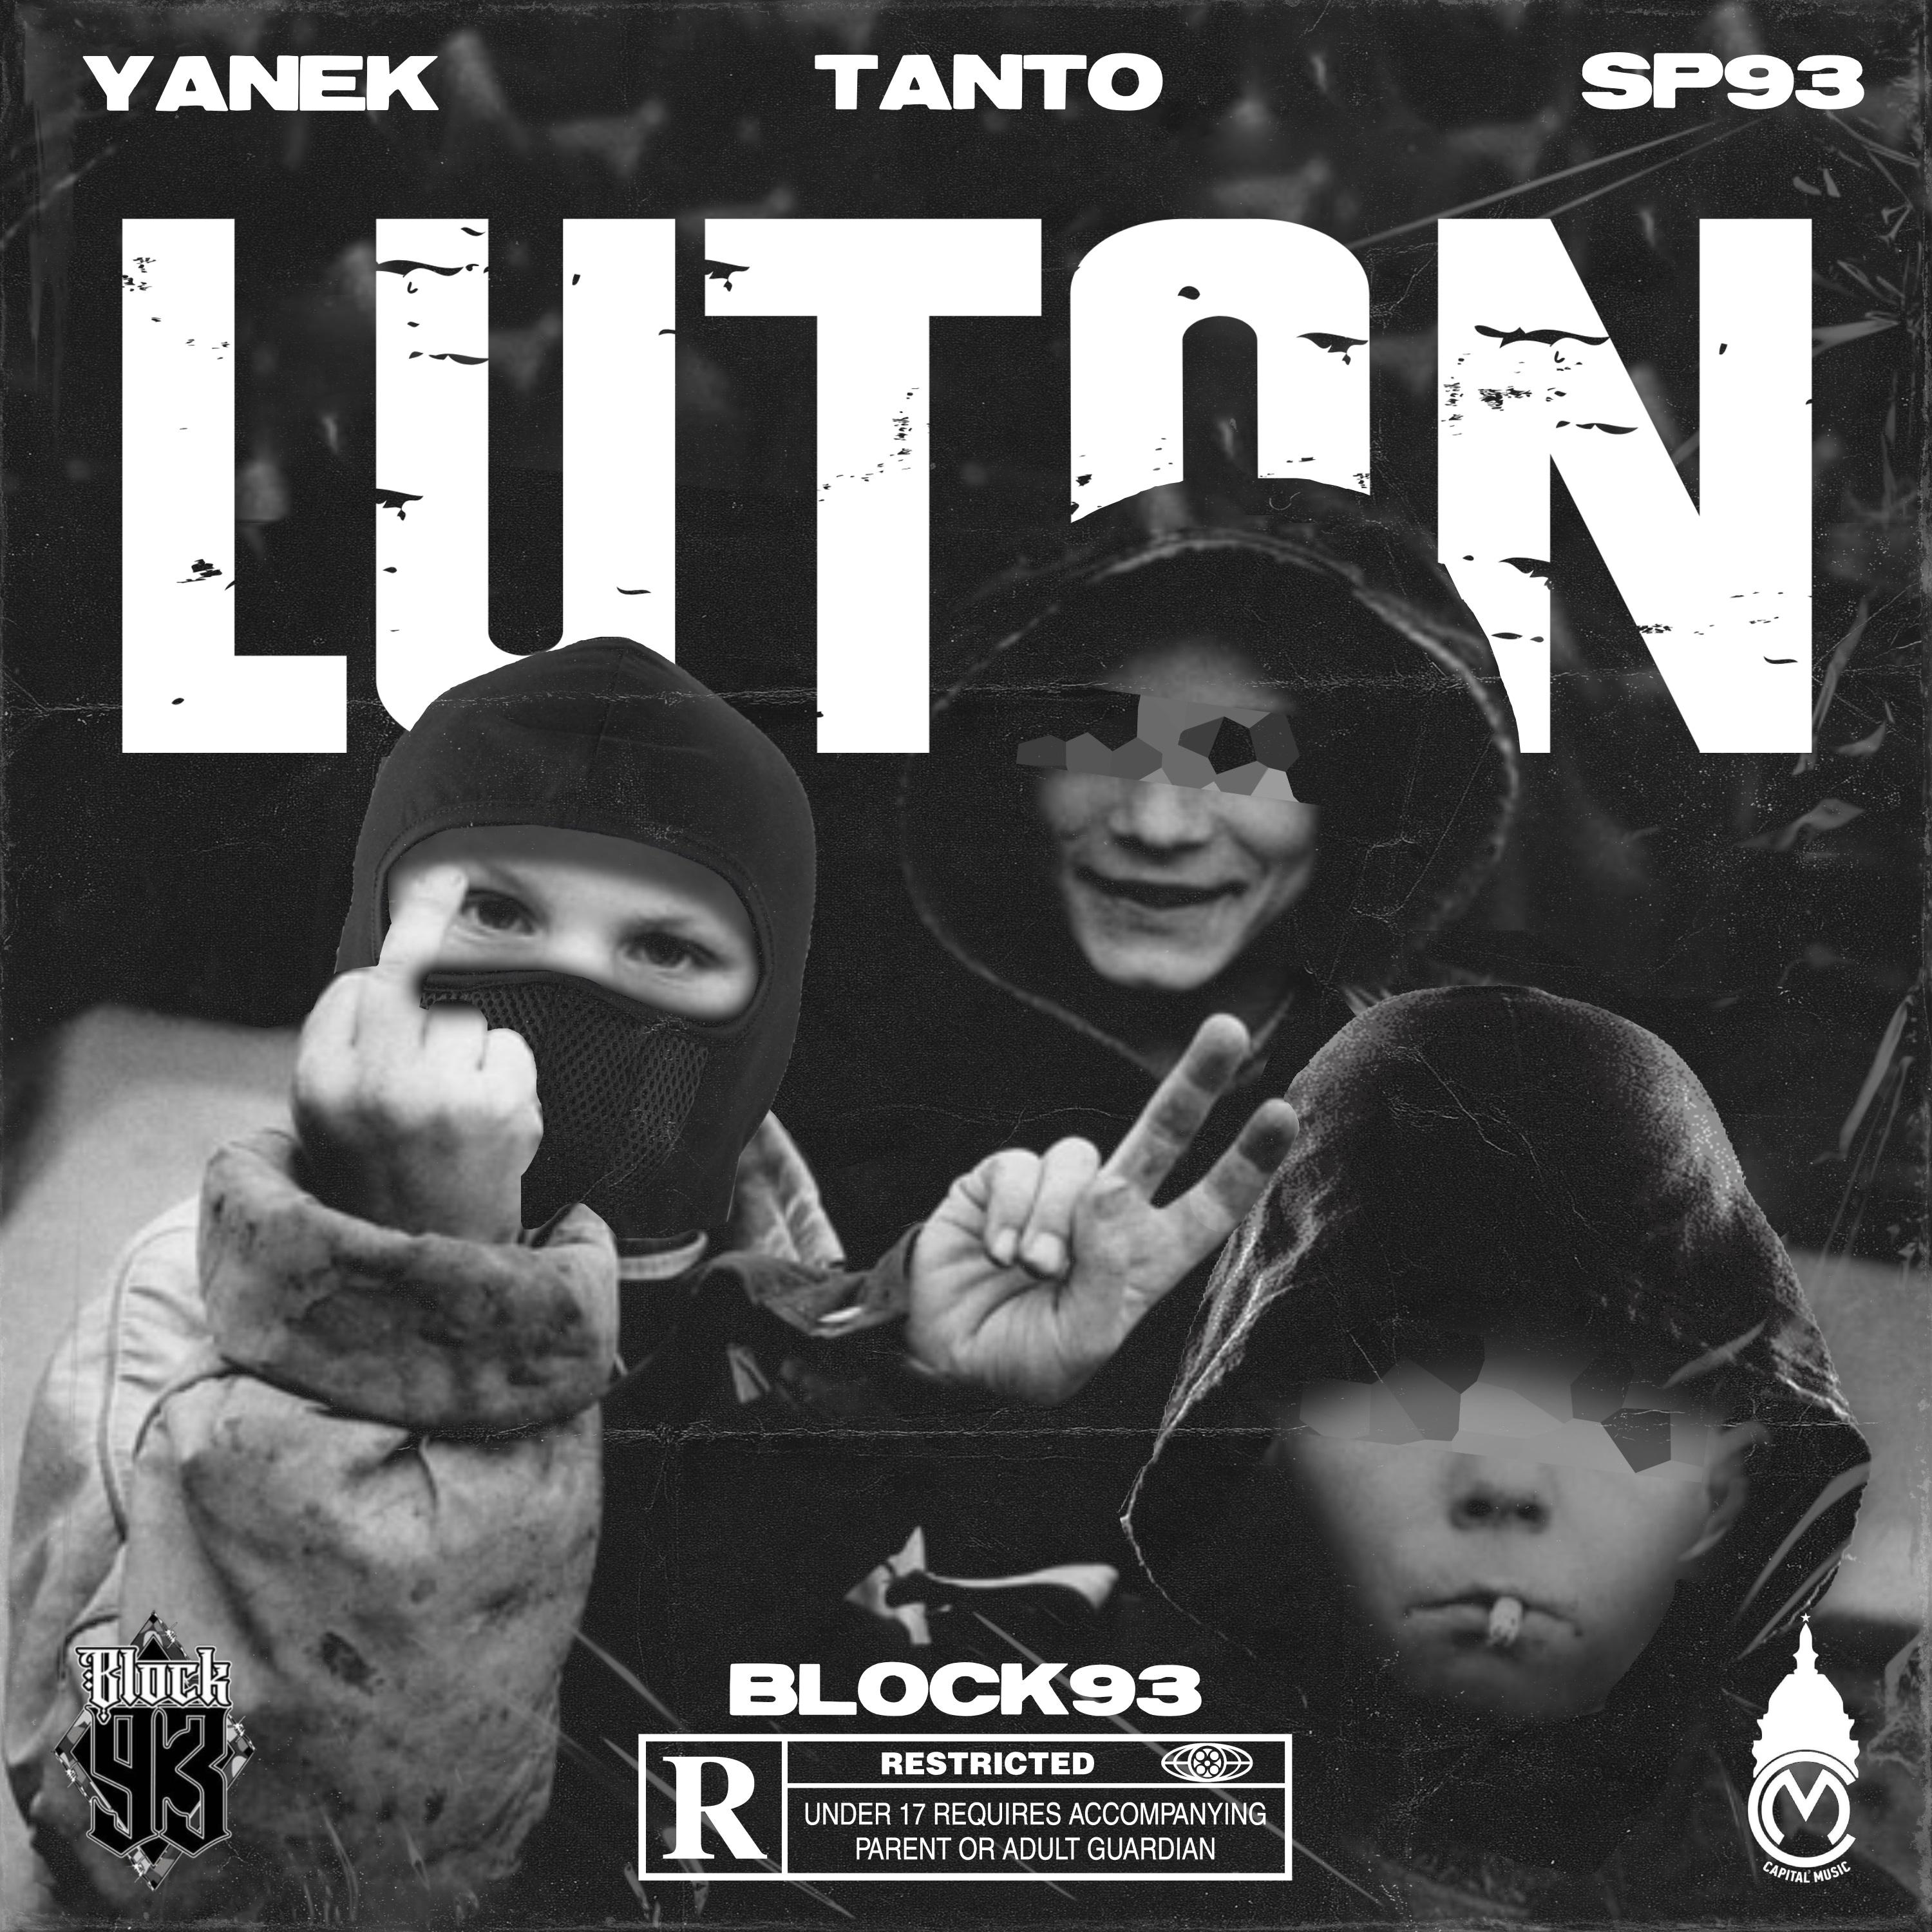 Постер альбома Luton